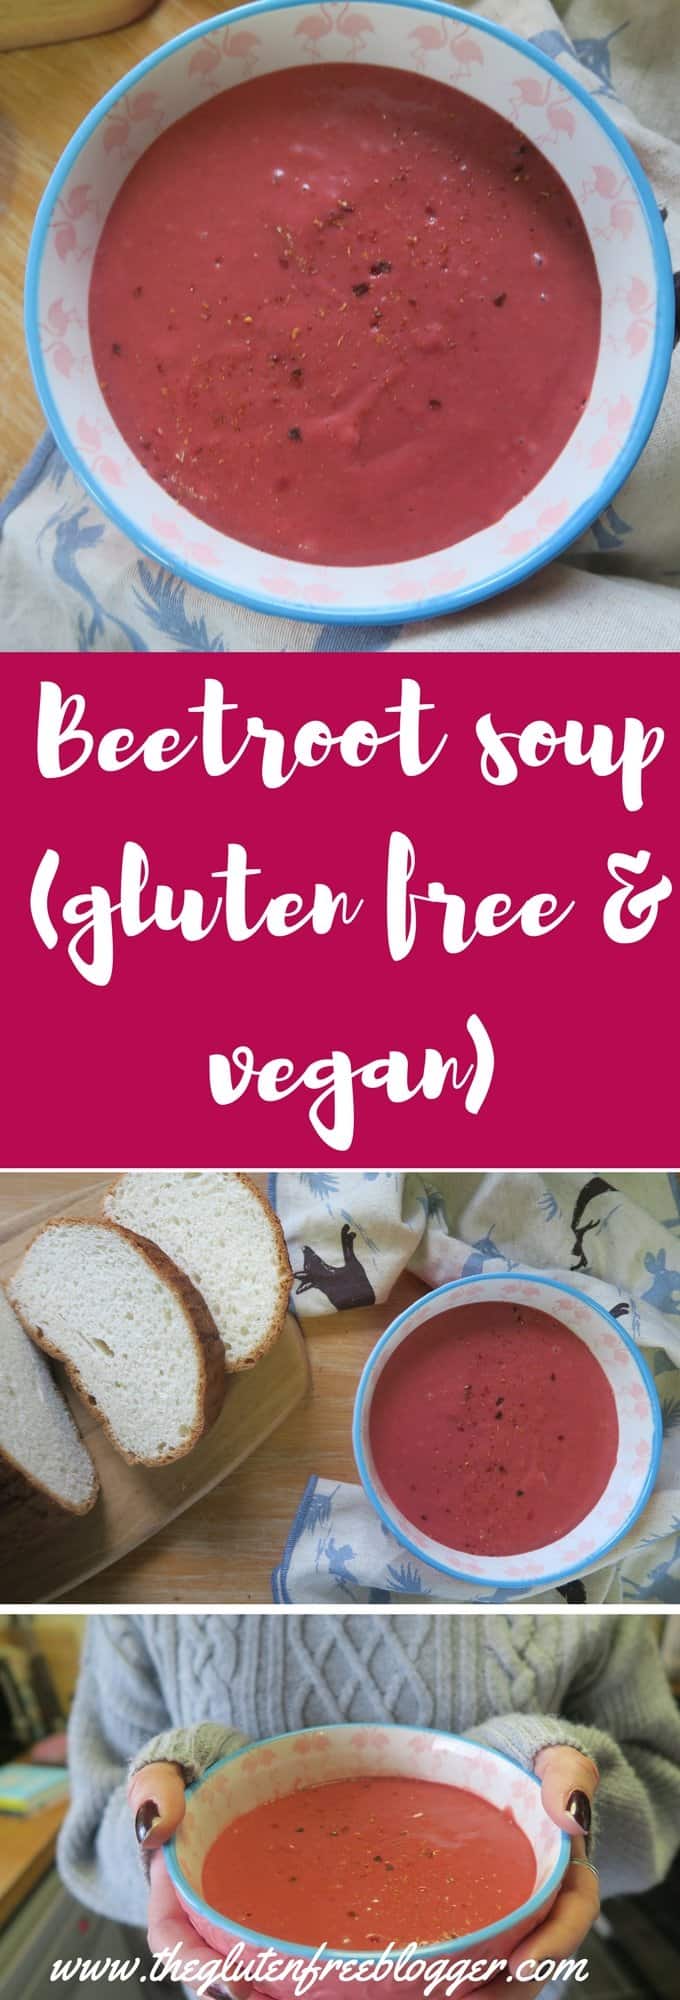 Gluten free beetroot soup recipe - dairy free soup - vegan soup - www.theglutenfreeblogger.com